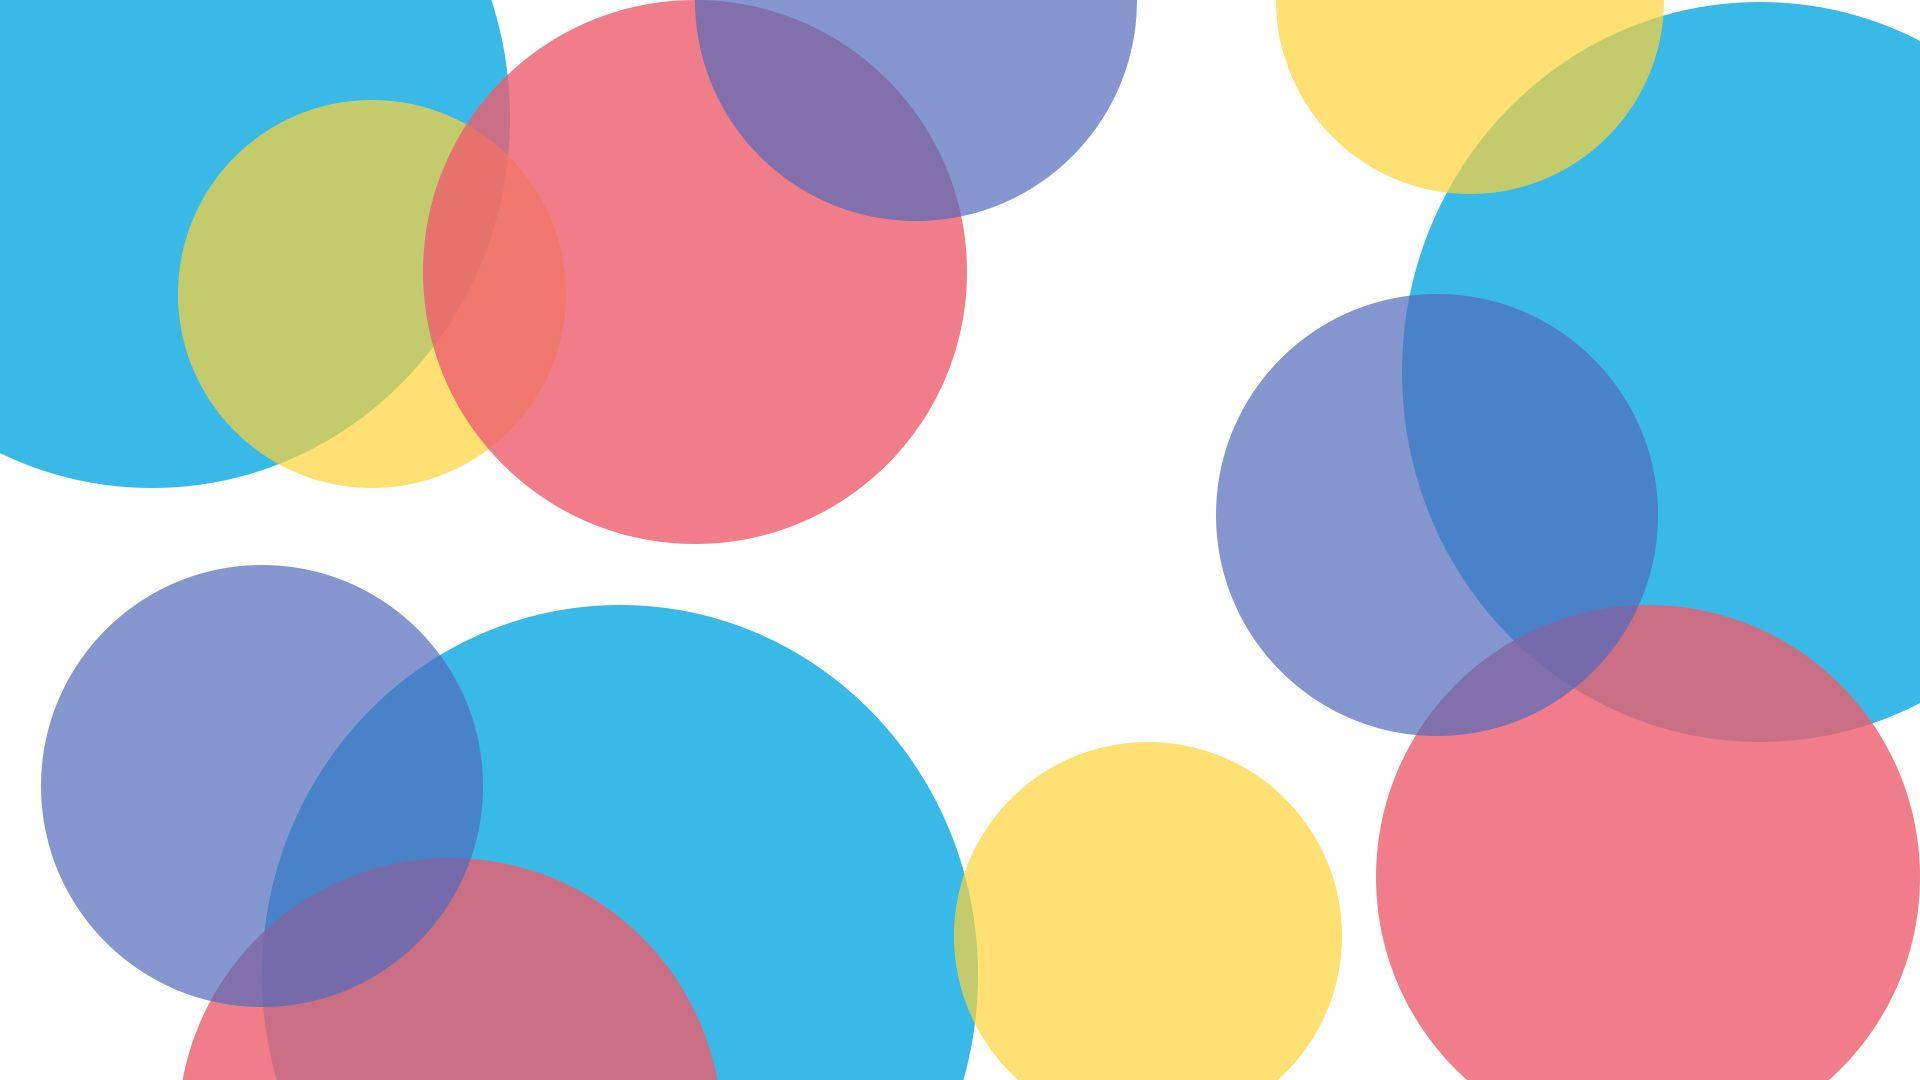 Rainbow Polka Dot Wallpaper